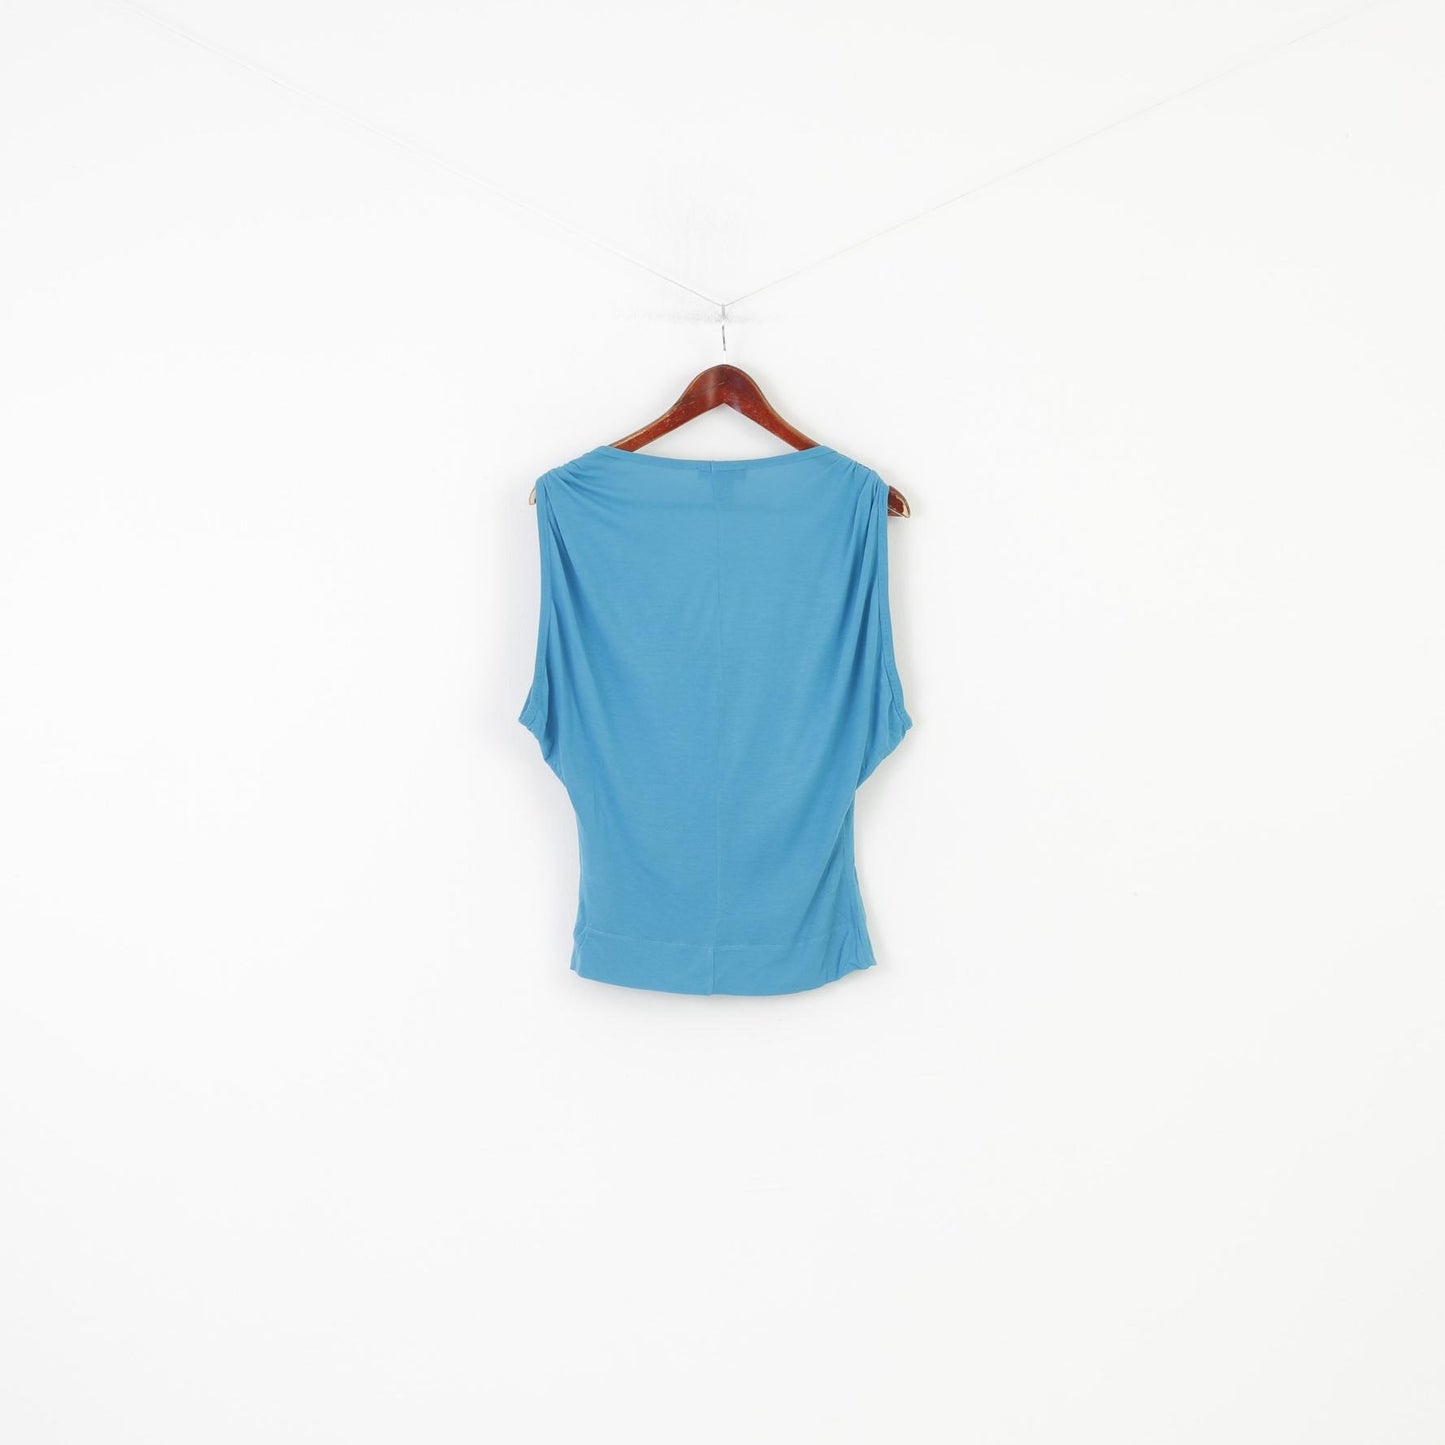 Diesel Woman M Shirt Sleeveless Blue Modal Stretch V Neck Top